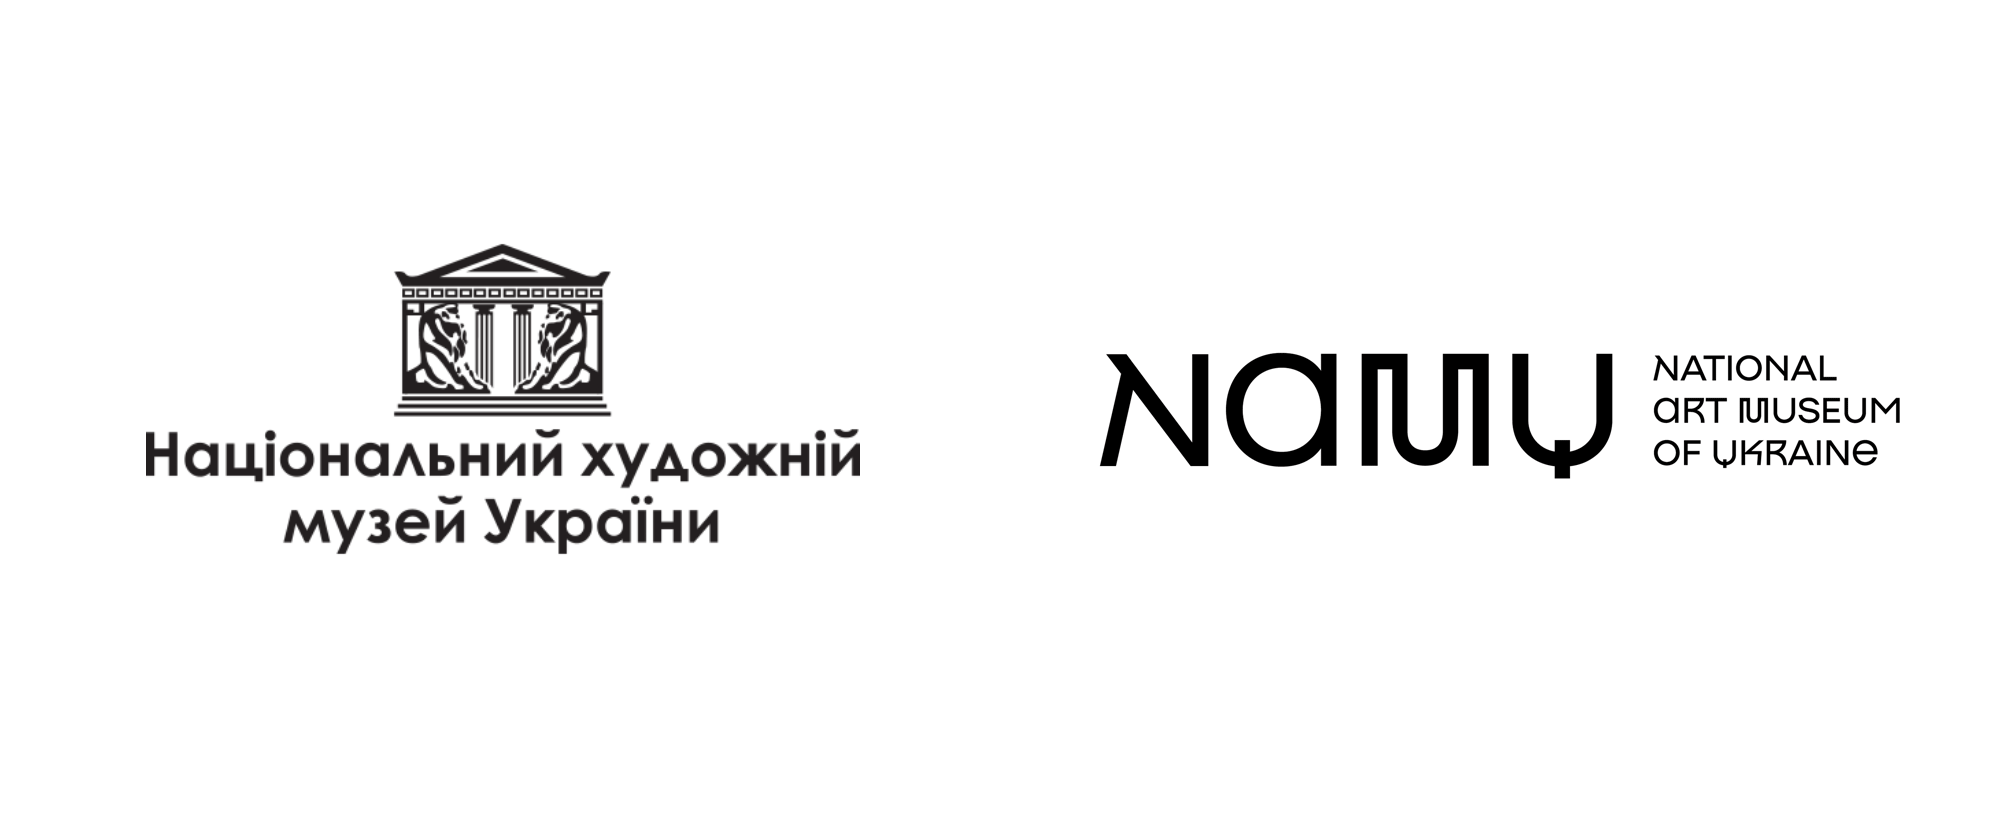 I Want U Logo - Brand New